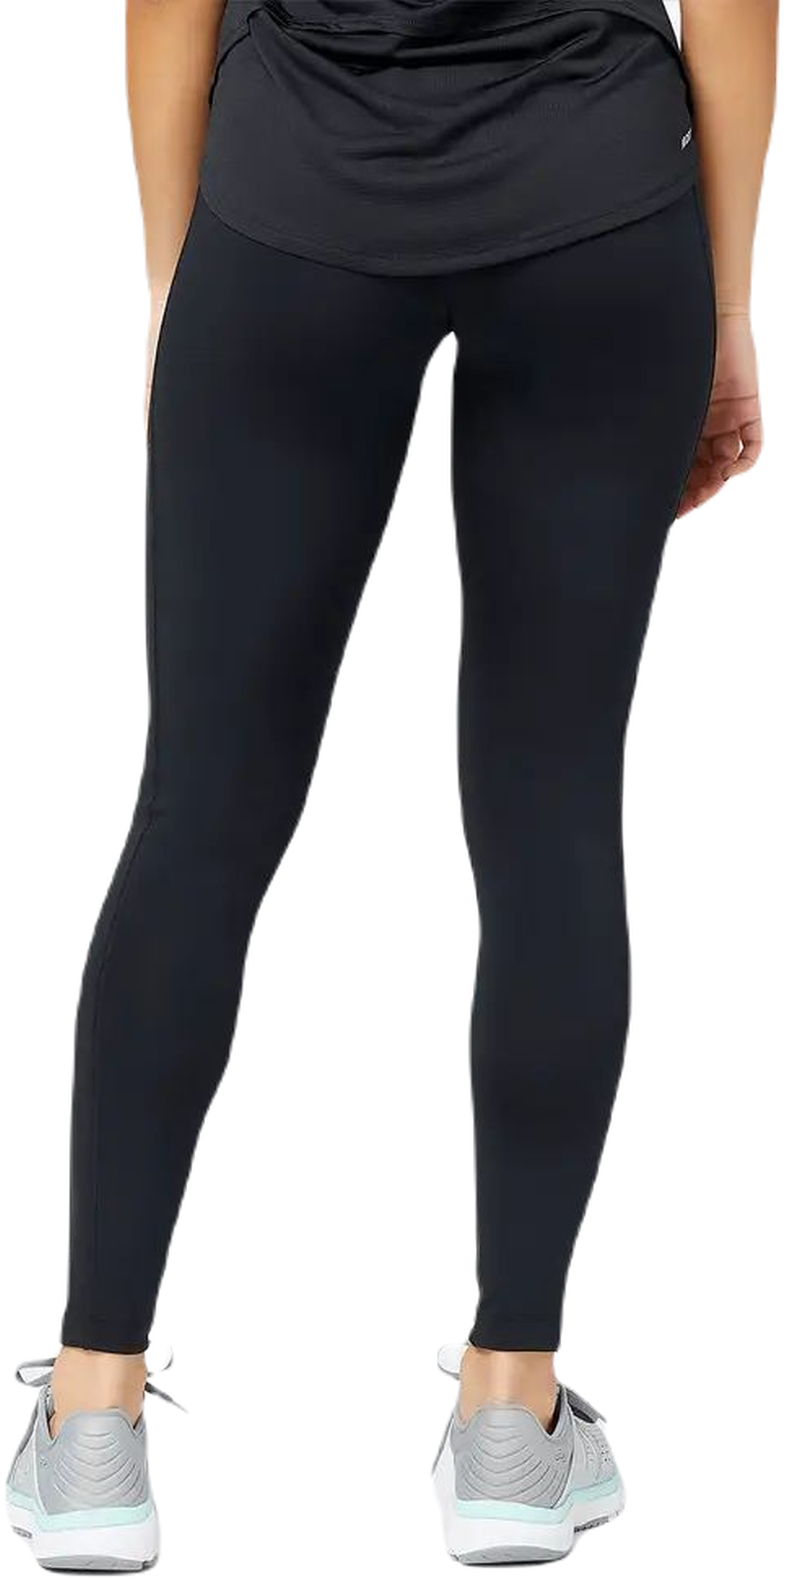 Women's leggings New Balance Accelerate Tight - black